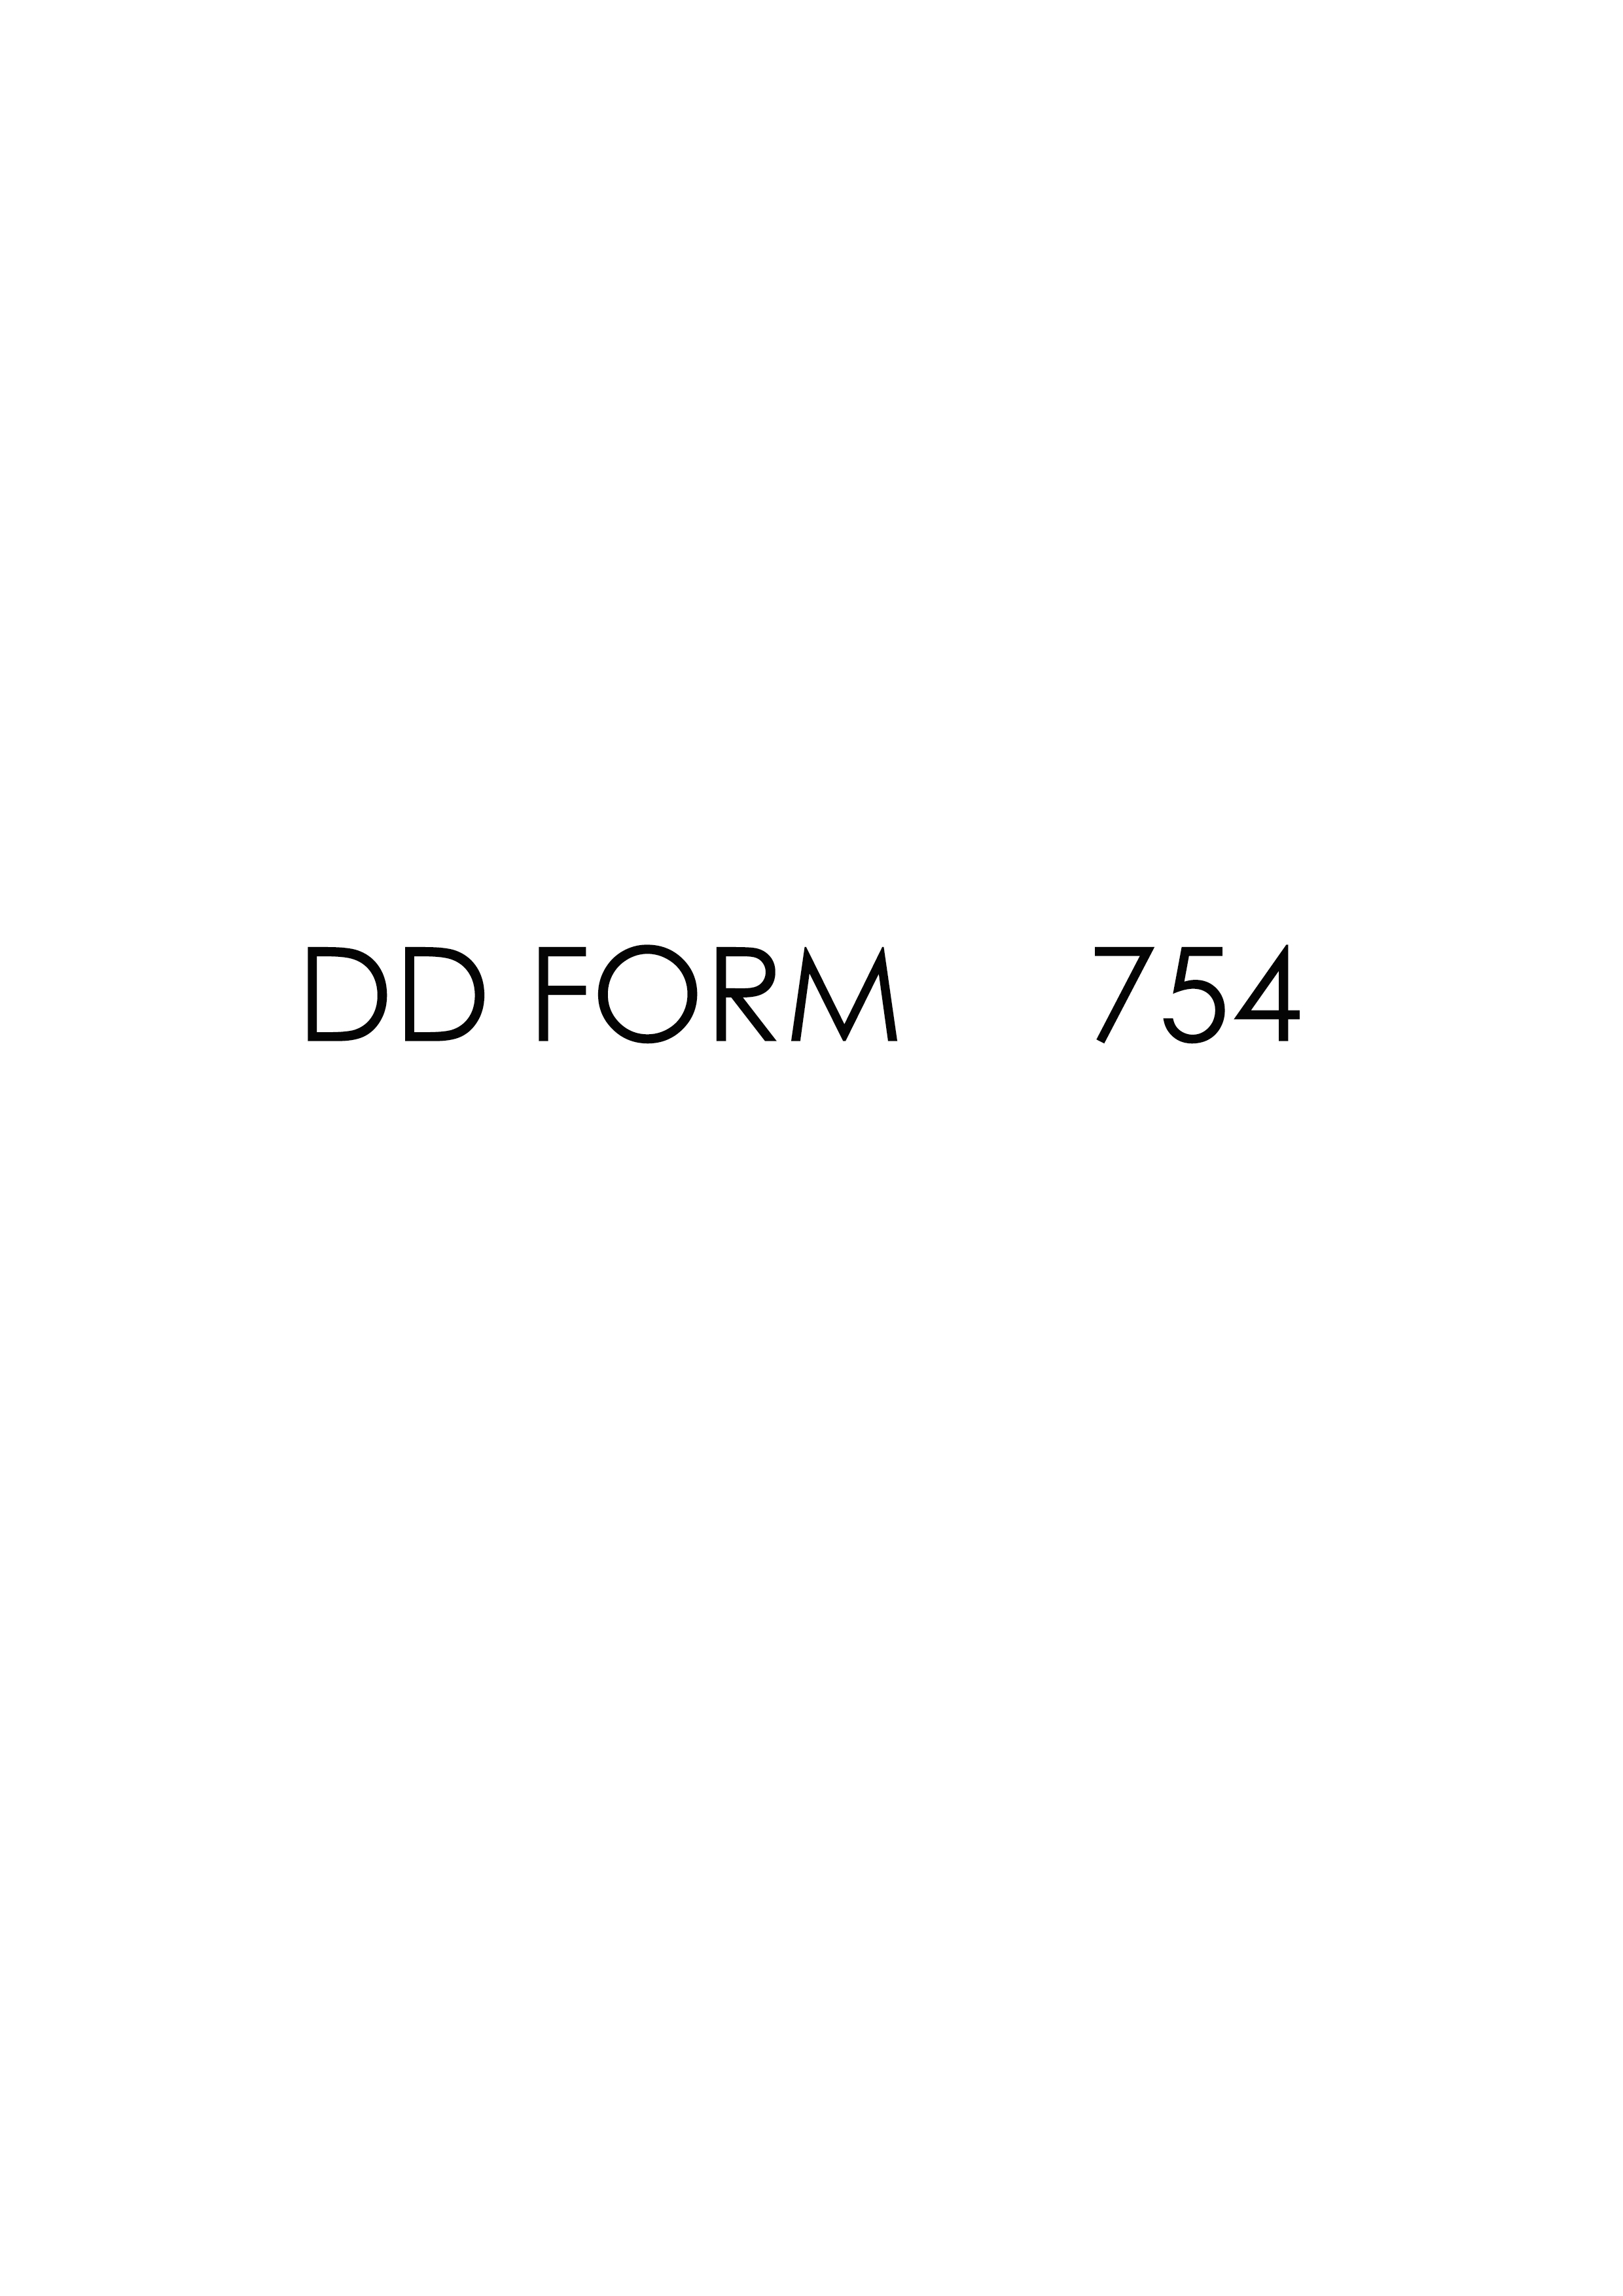 Download dd 754 Form